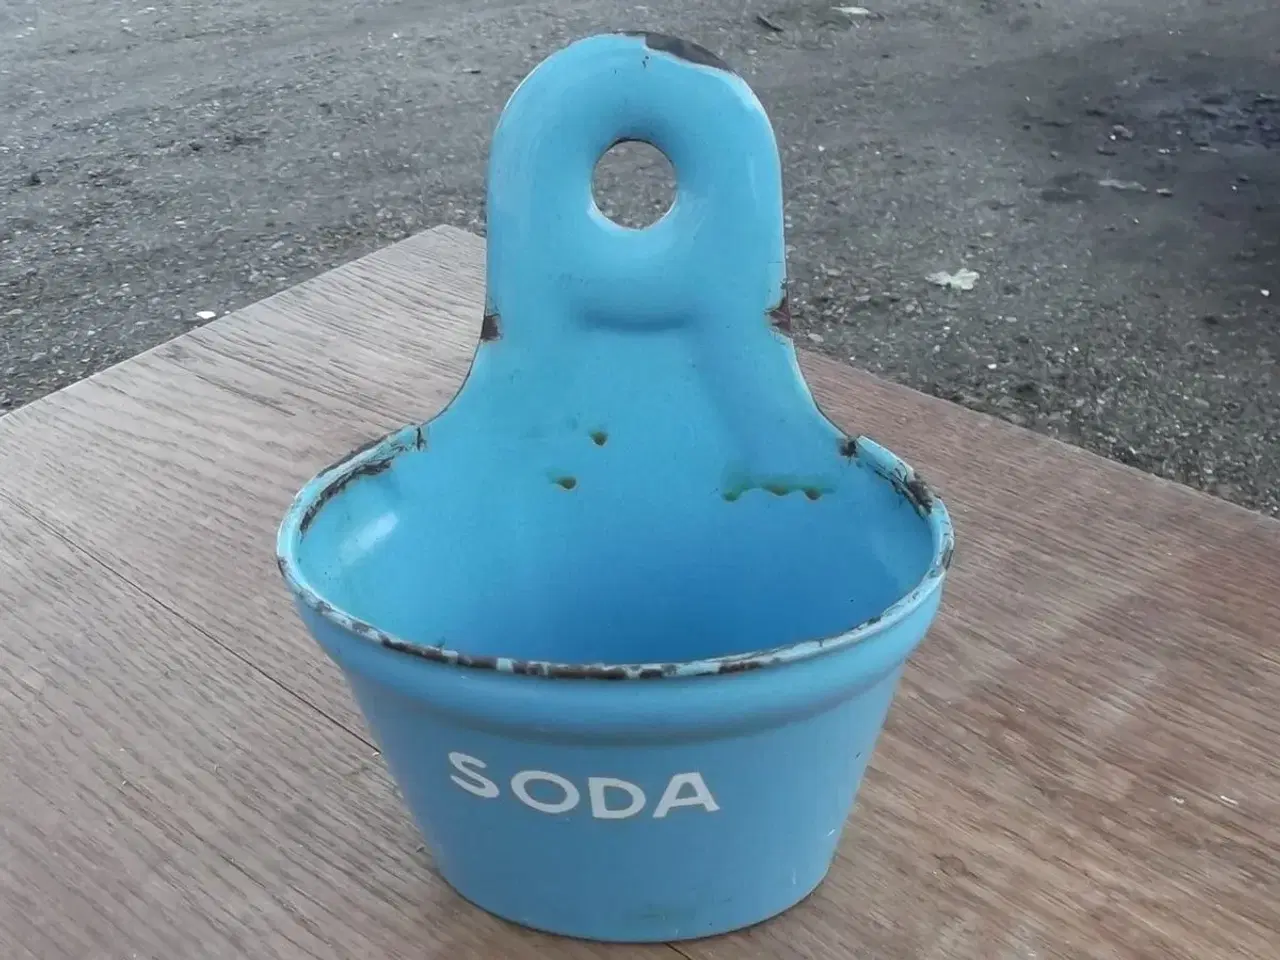 Billede 1 - skål til Soda i blå emalje